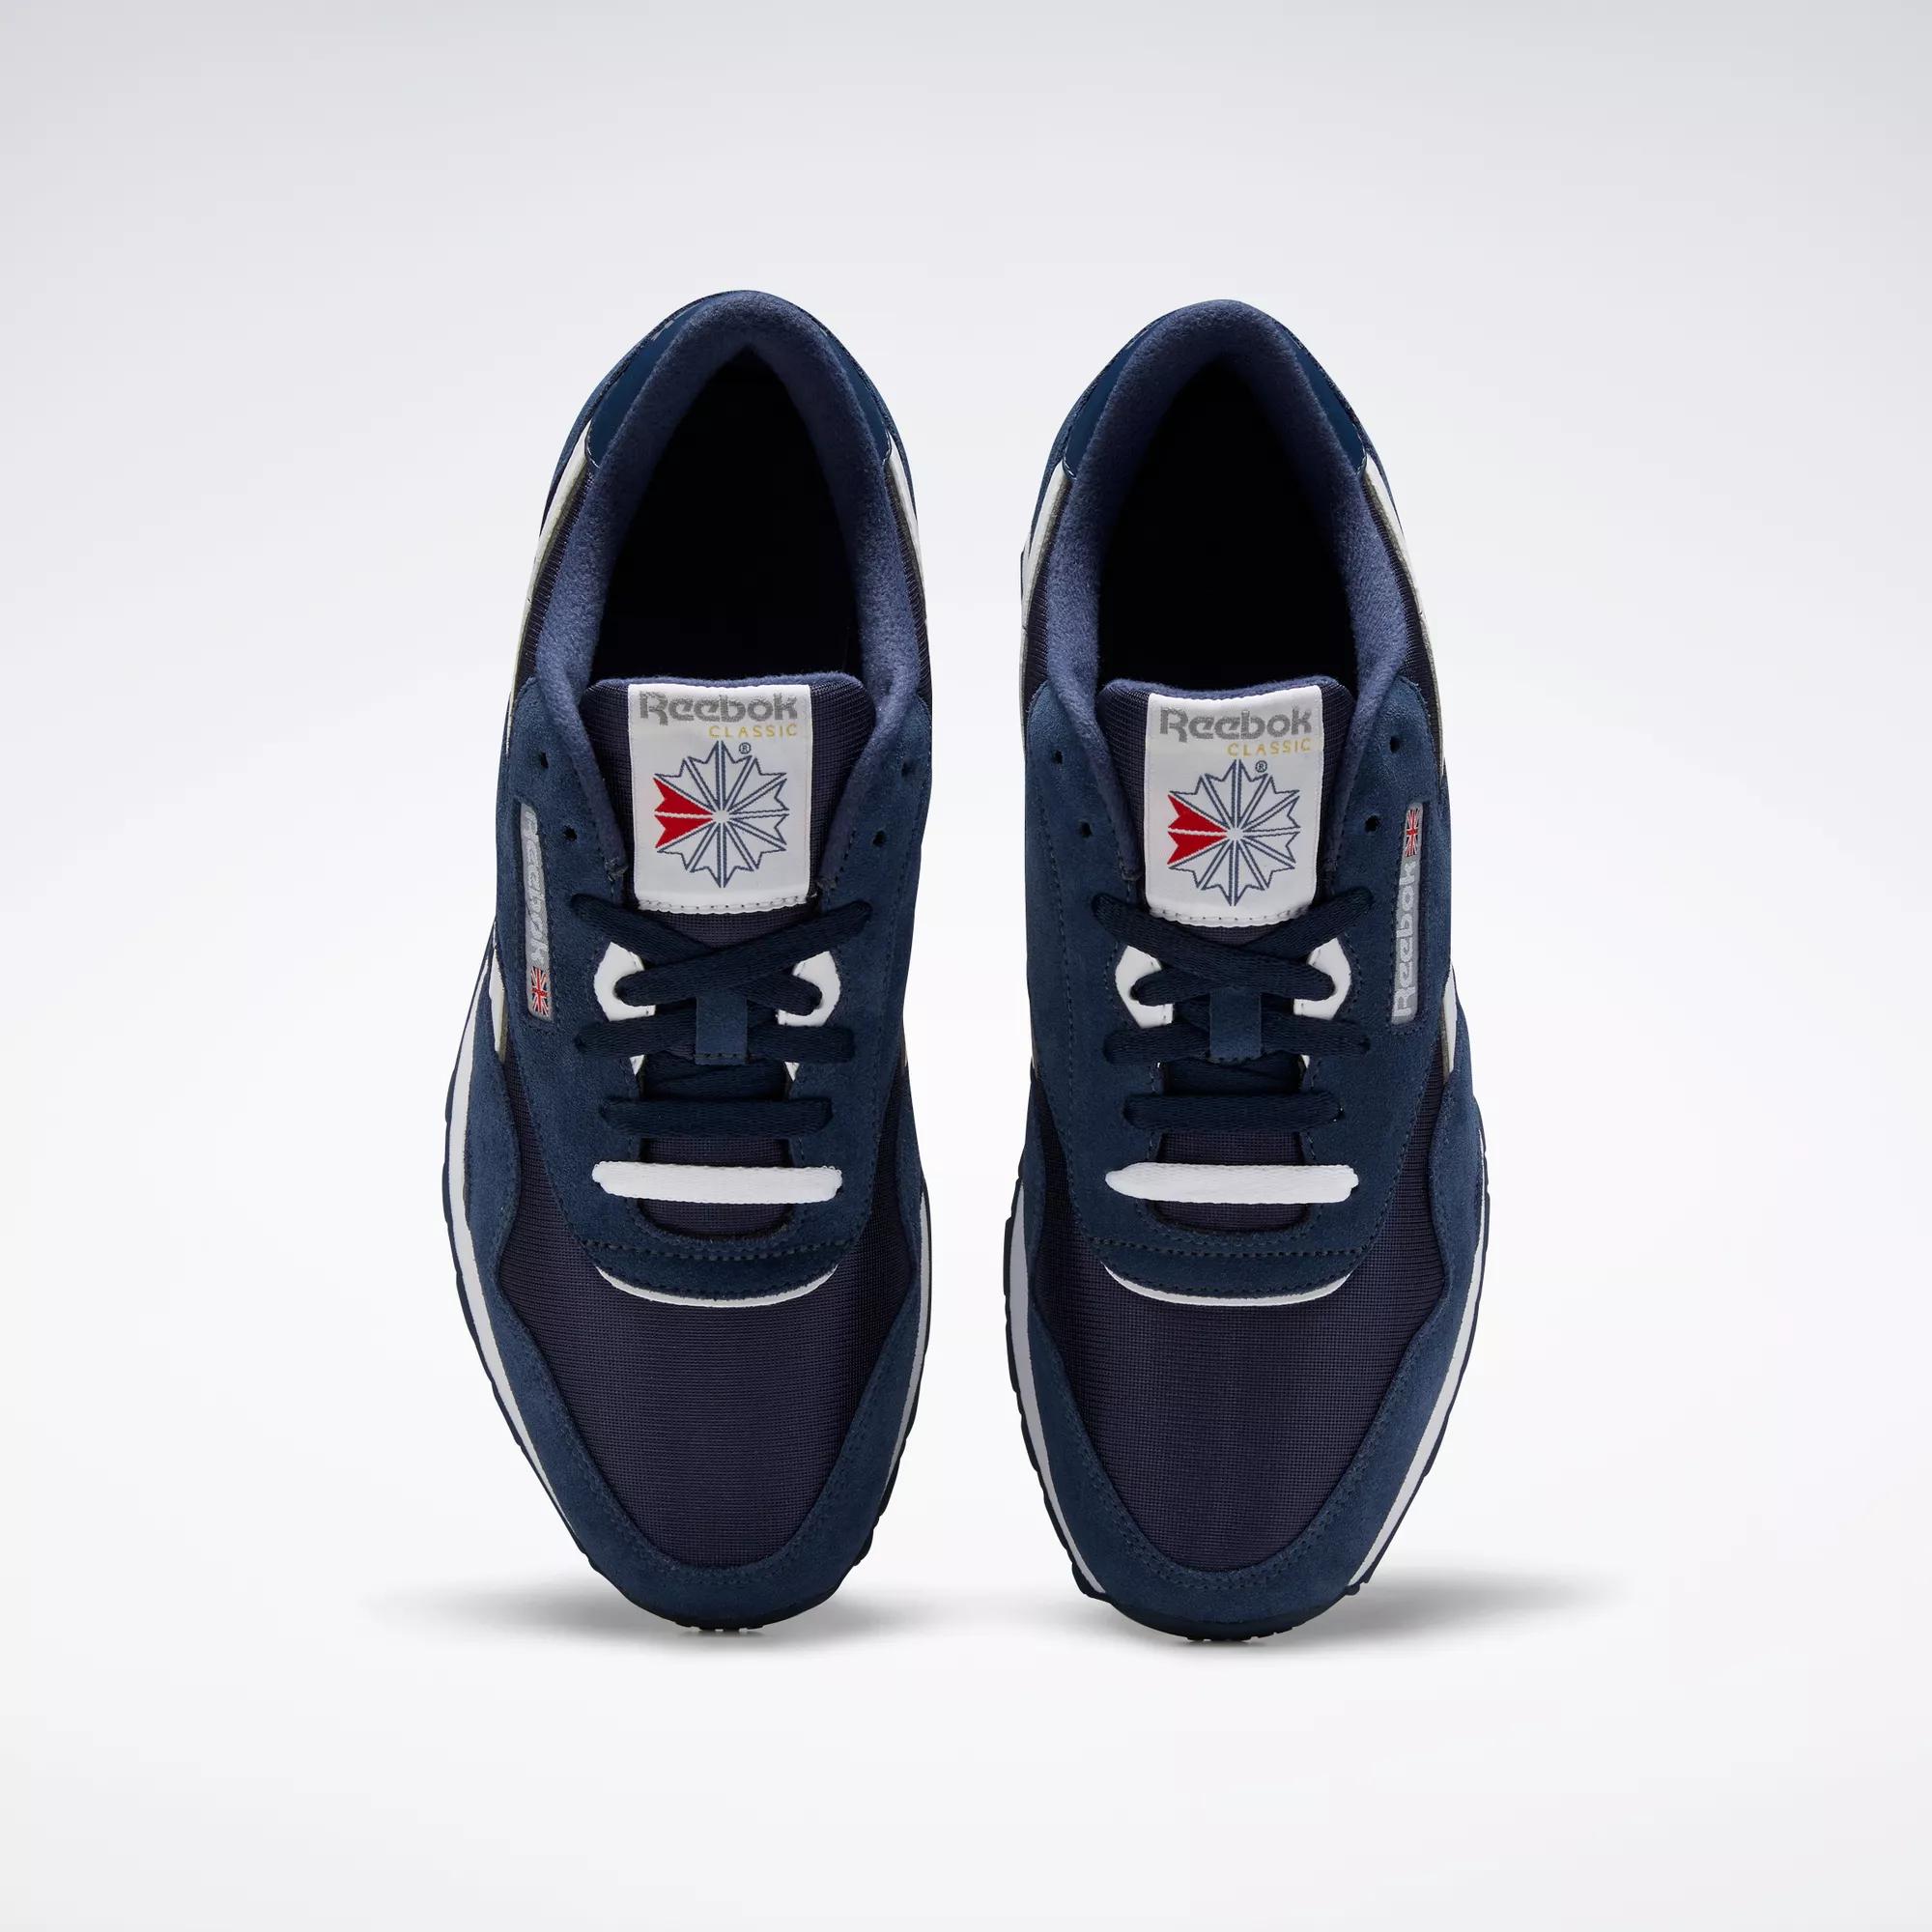 Reebok Classic Nylon Men's Shoes - image 5 of 10